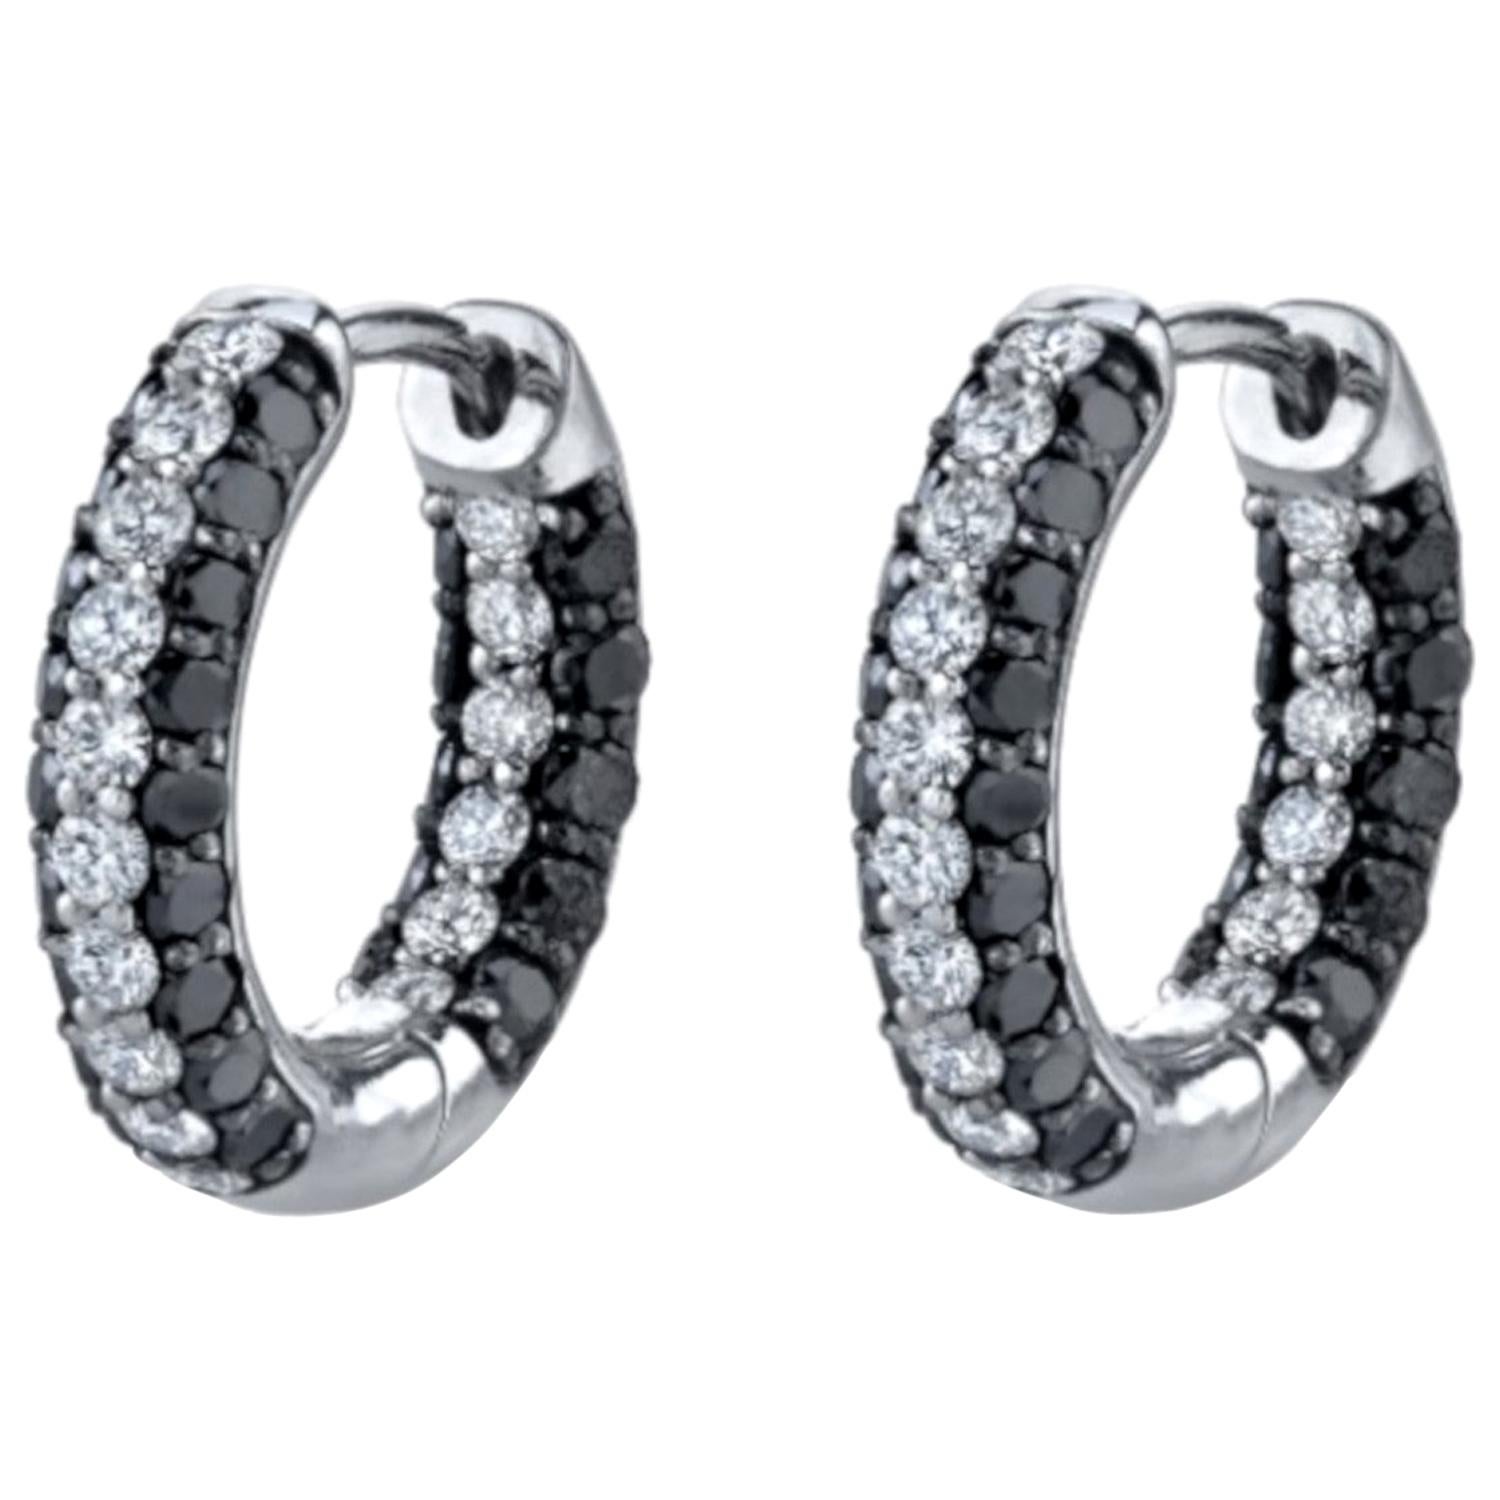 1.96 Carat Black Diamond and White Diamond Hoop Earrings 18 Karat White Gold